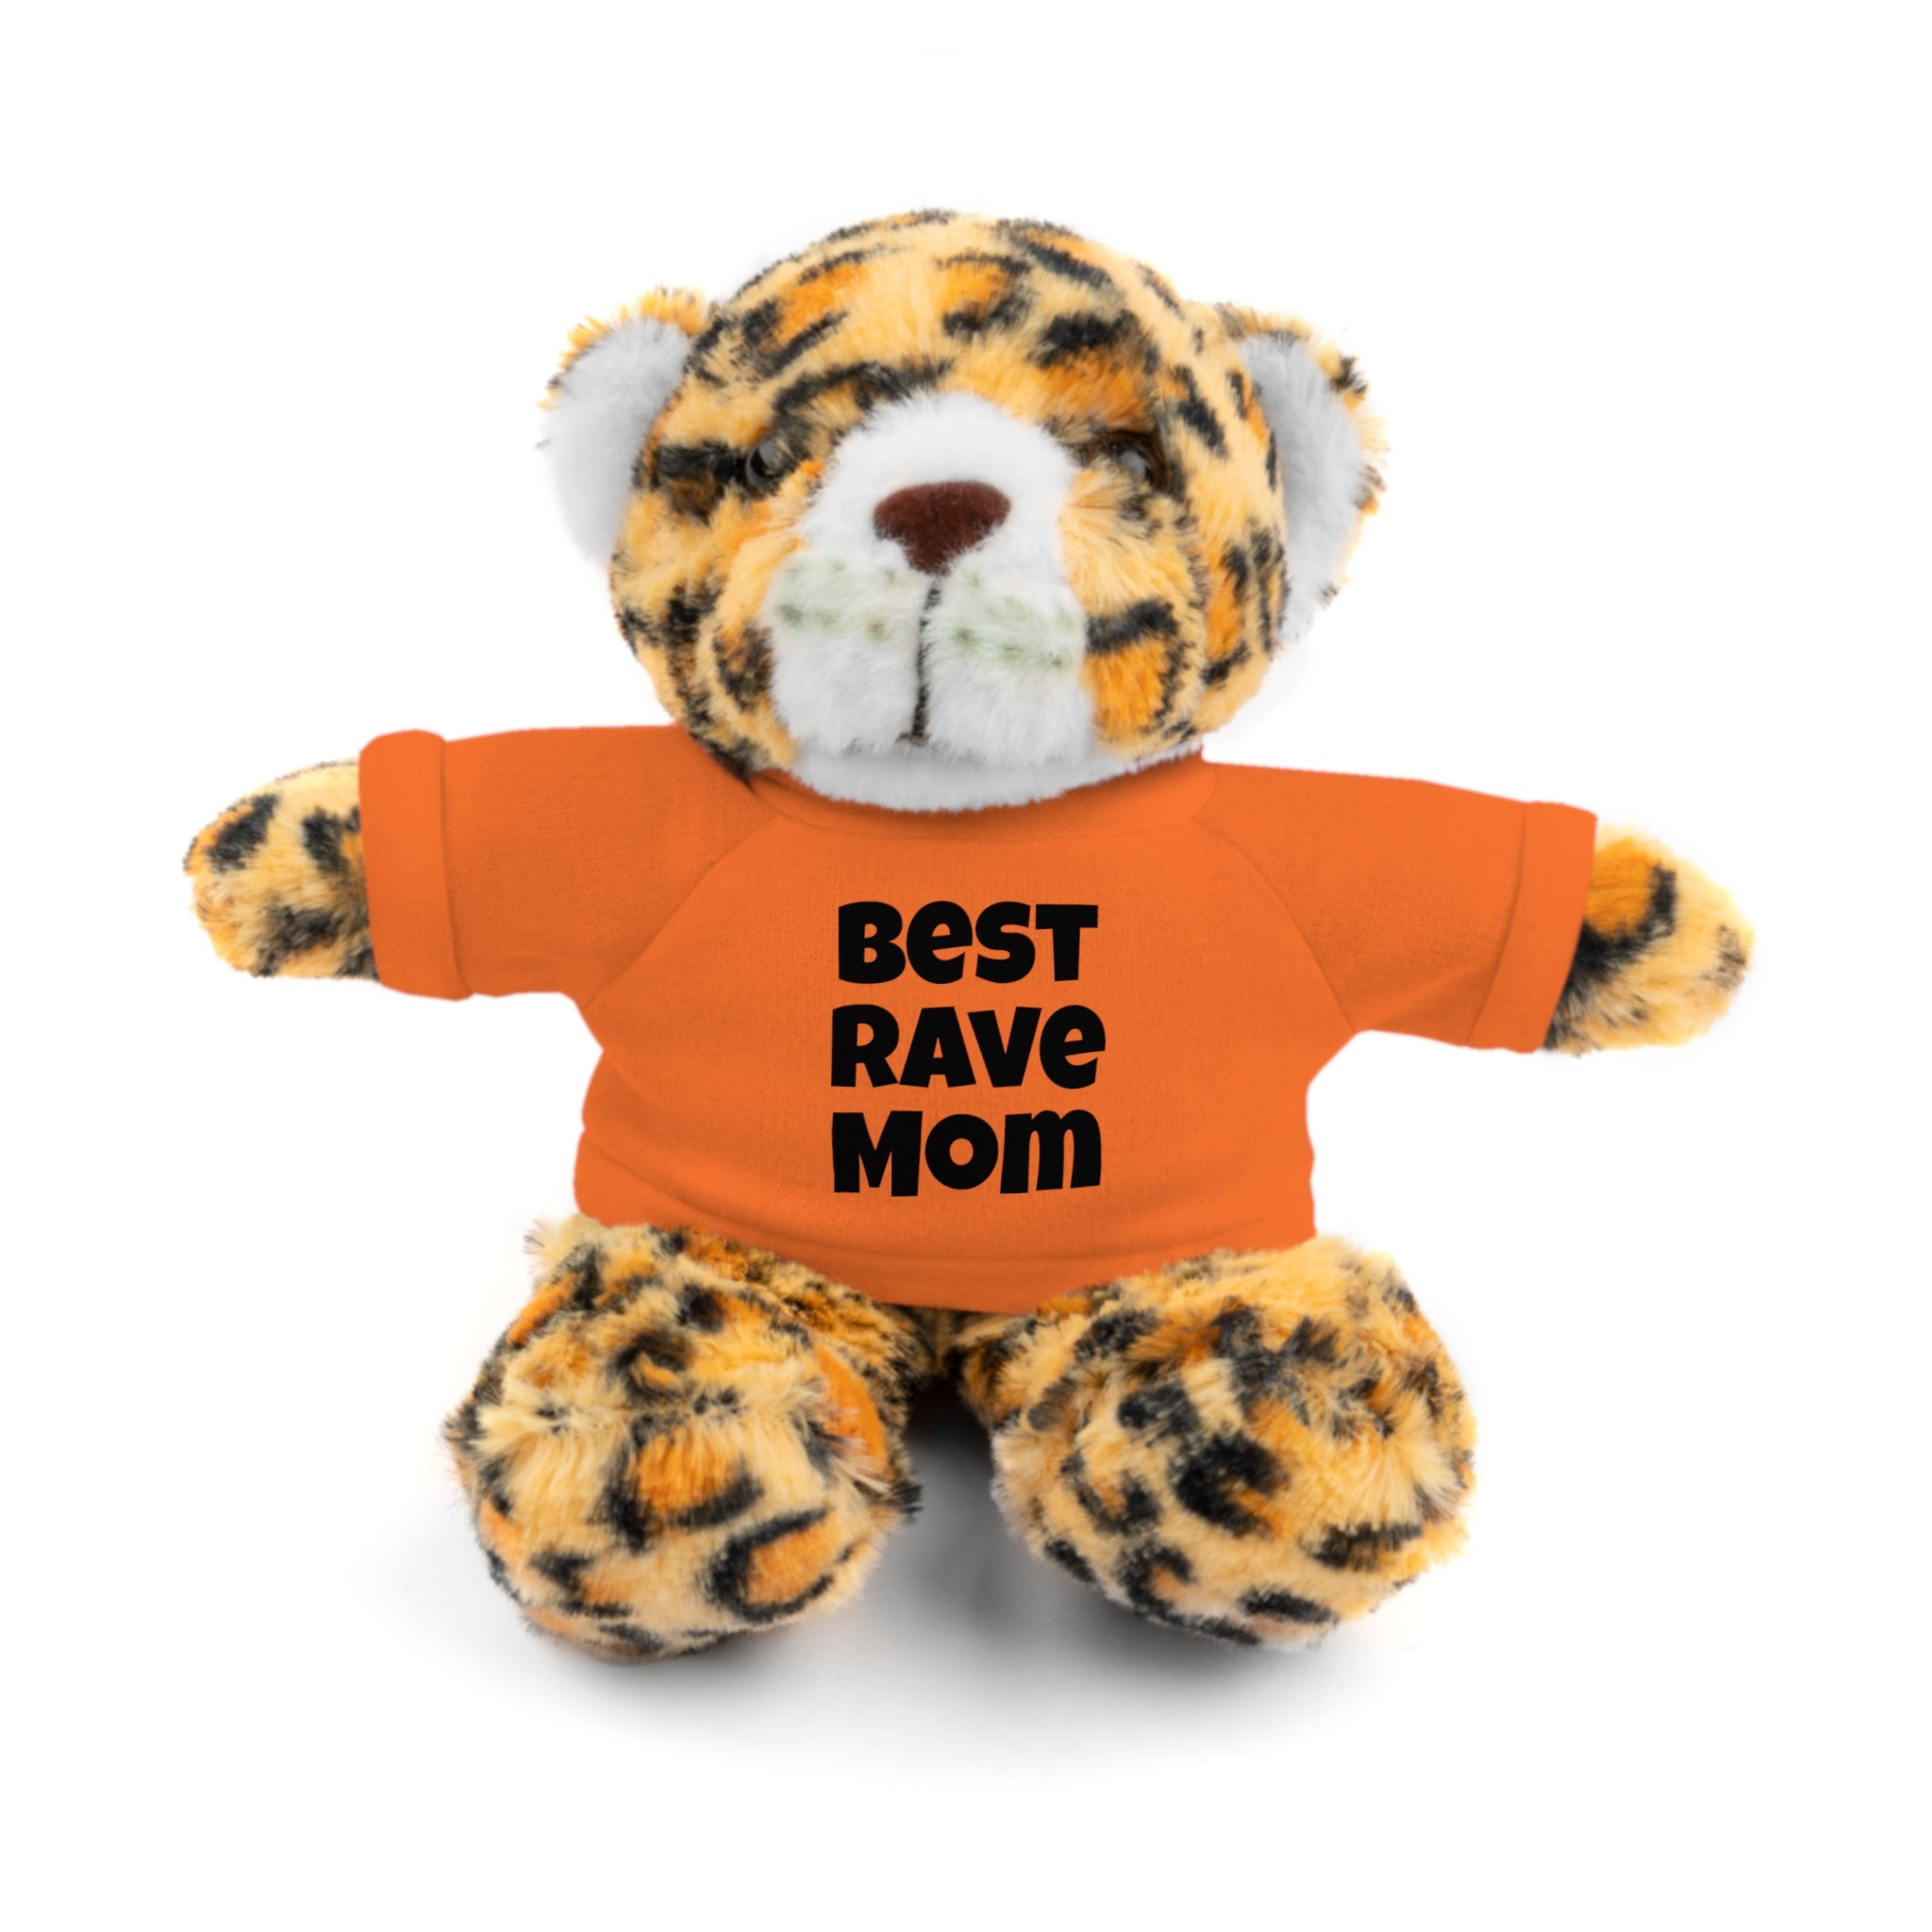 Best Rave Mom Stuffed Animal with Tee